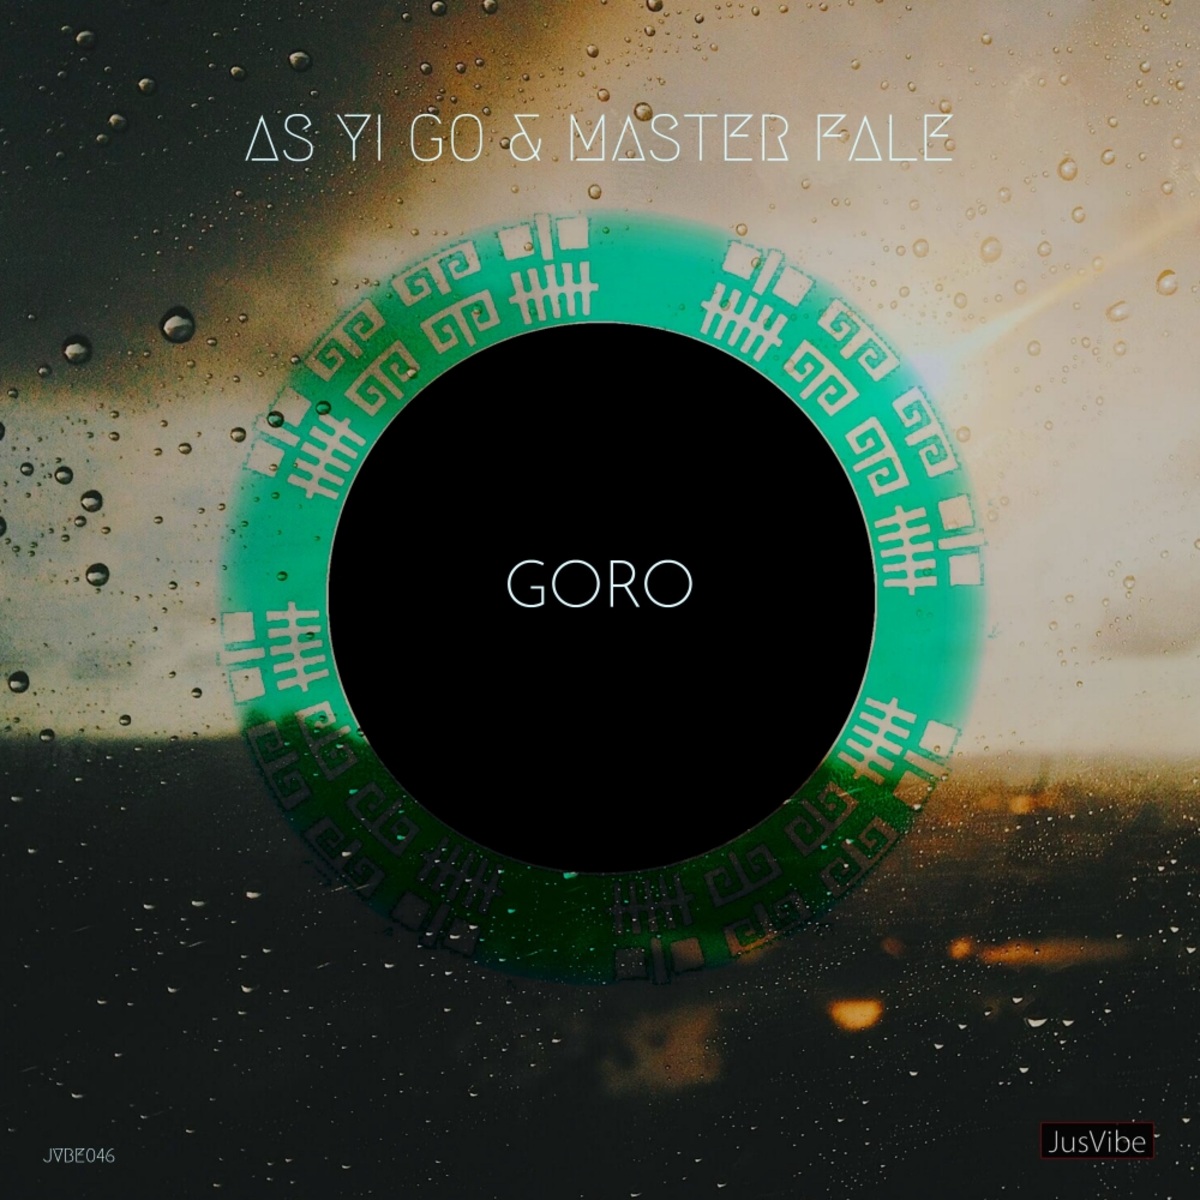 Asyigo & Master Fale - Goro / JusVibe